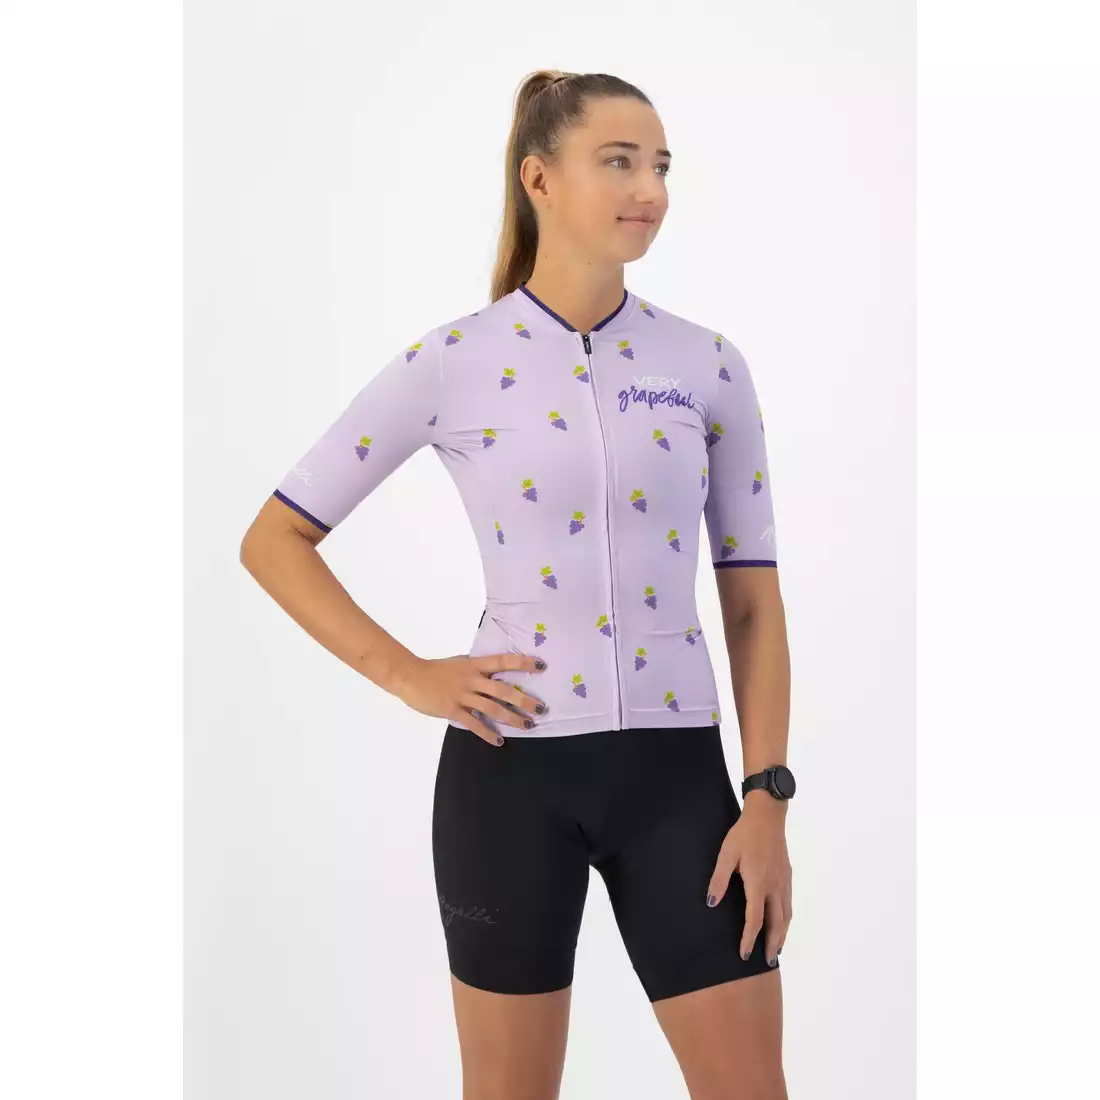 ROGELLI FRUITY Women's cycling jersey, Violet